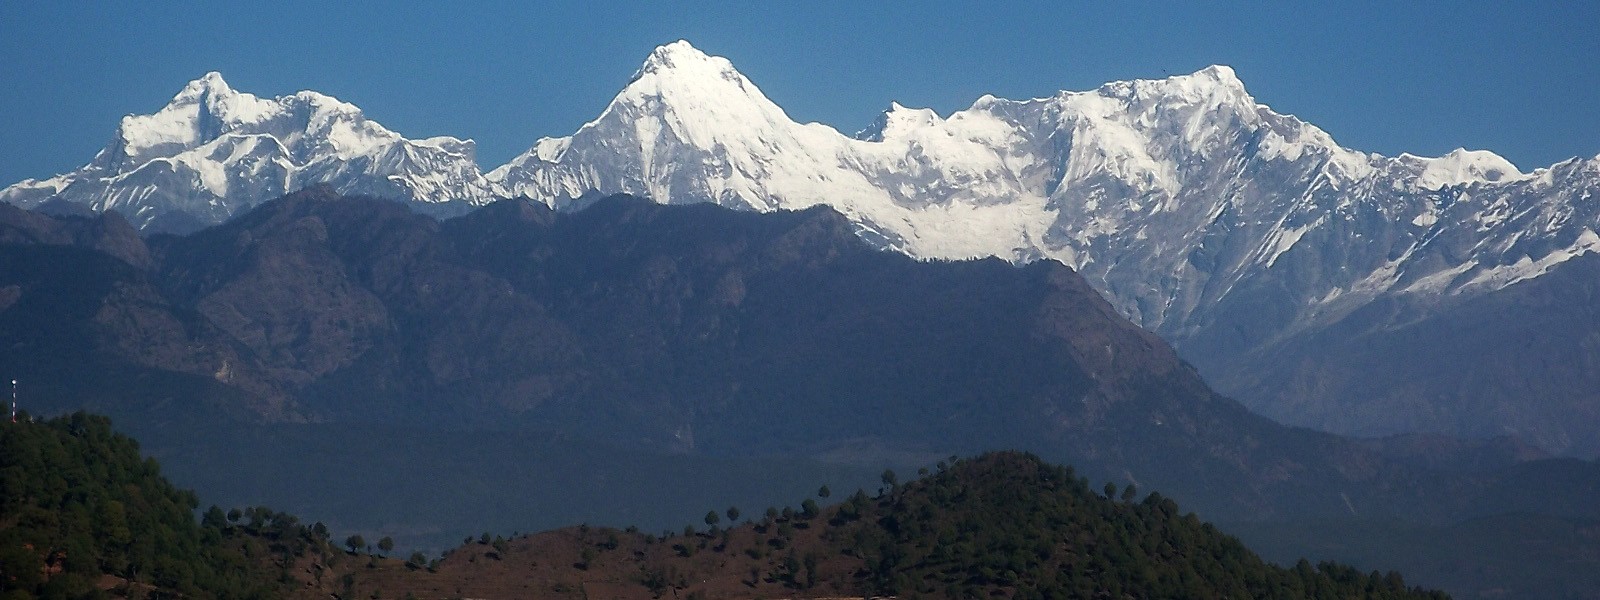 Ganesh Himal High Passes Trekking in Nepal